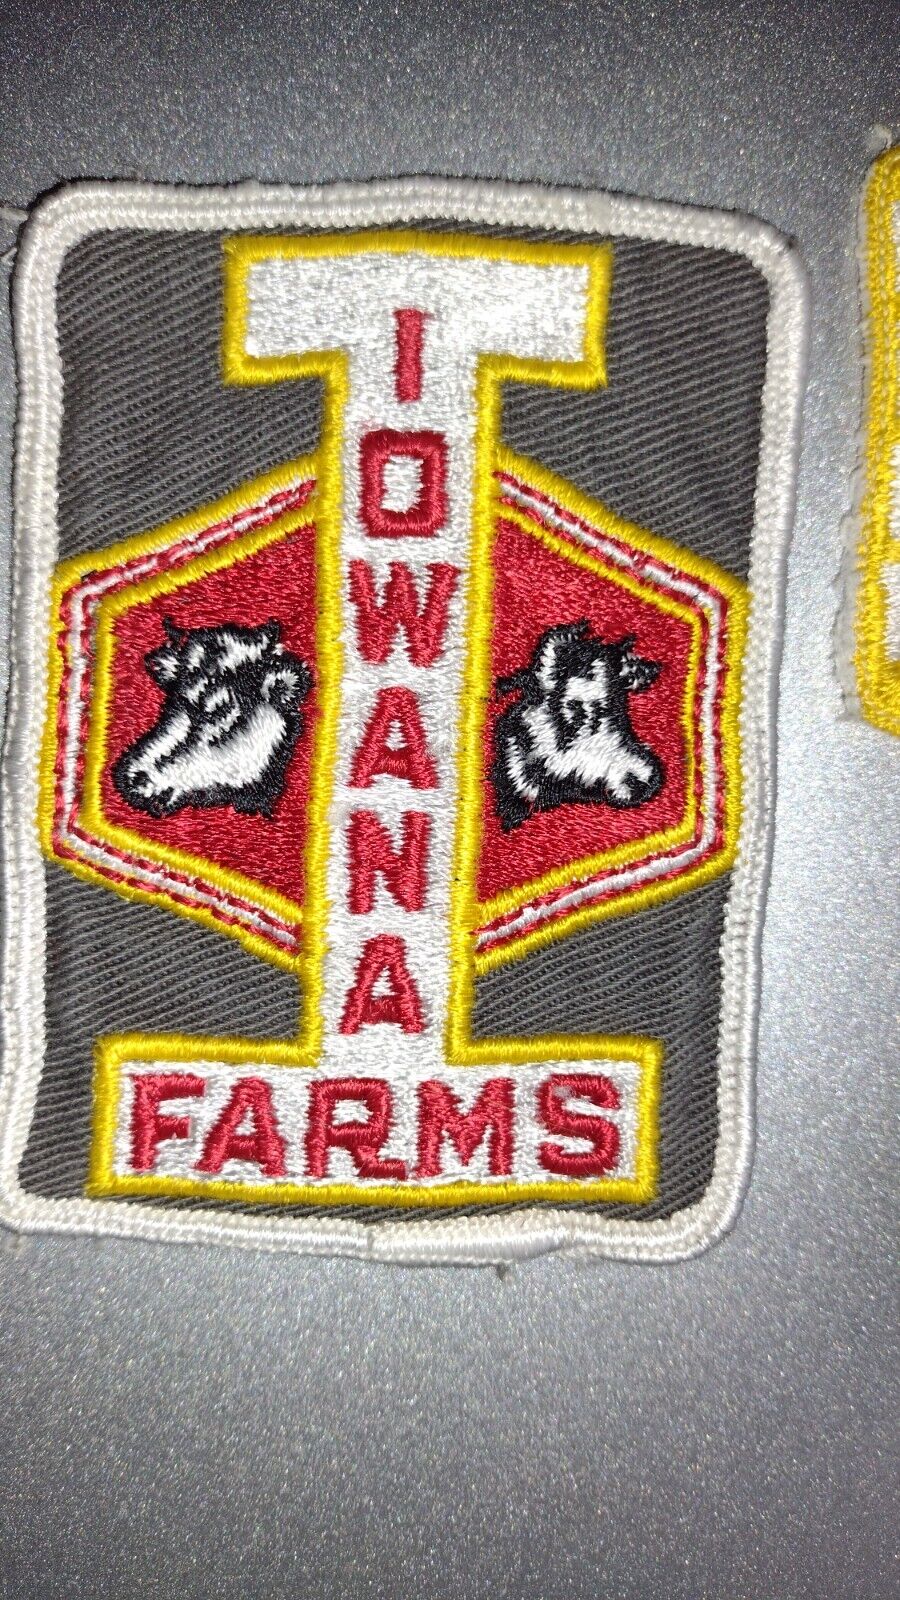 2 Iowana Farms vintage patches